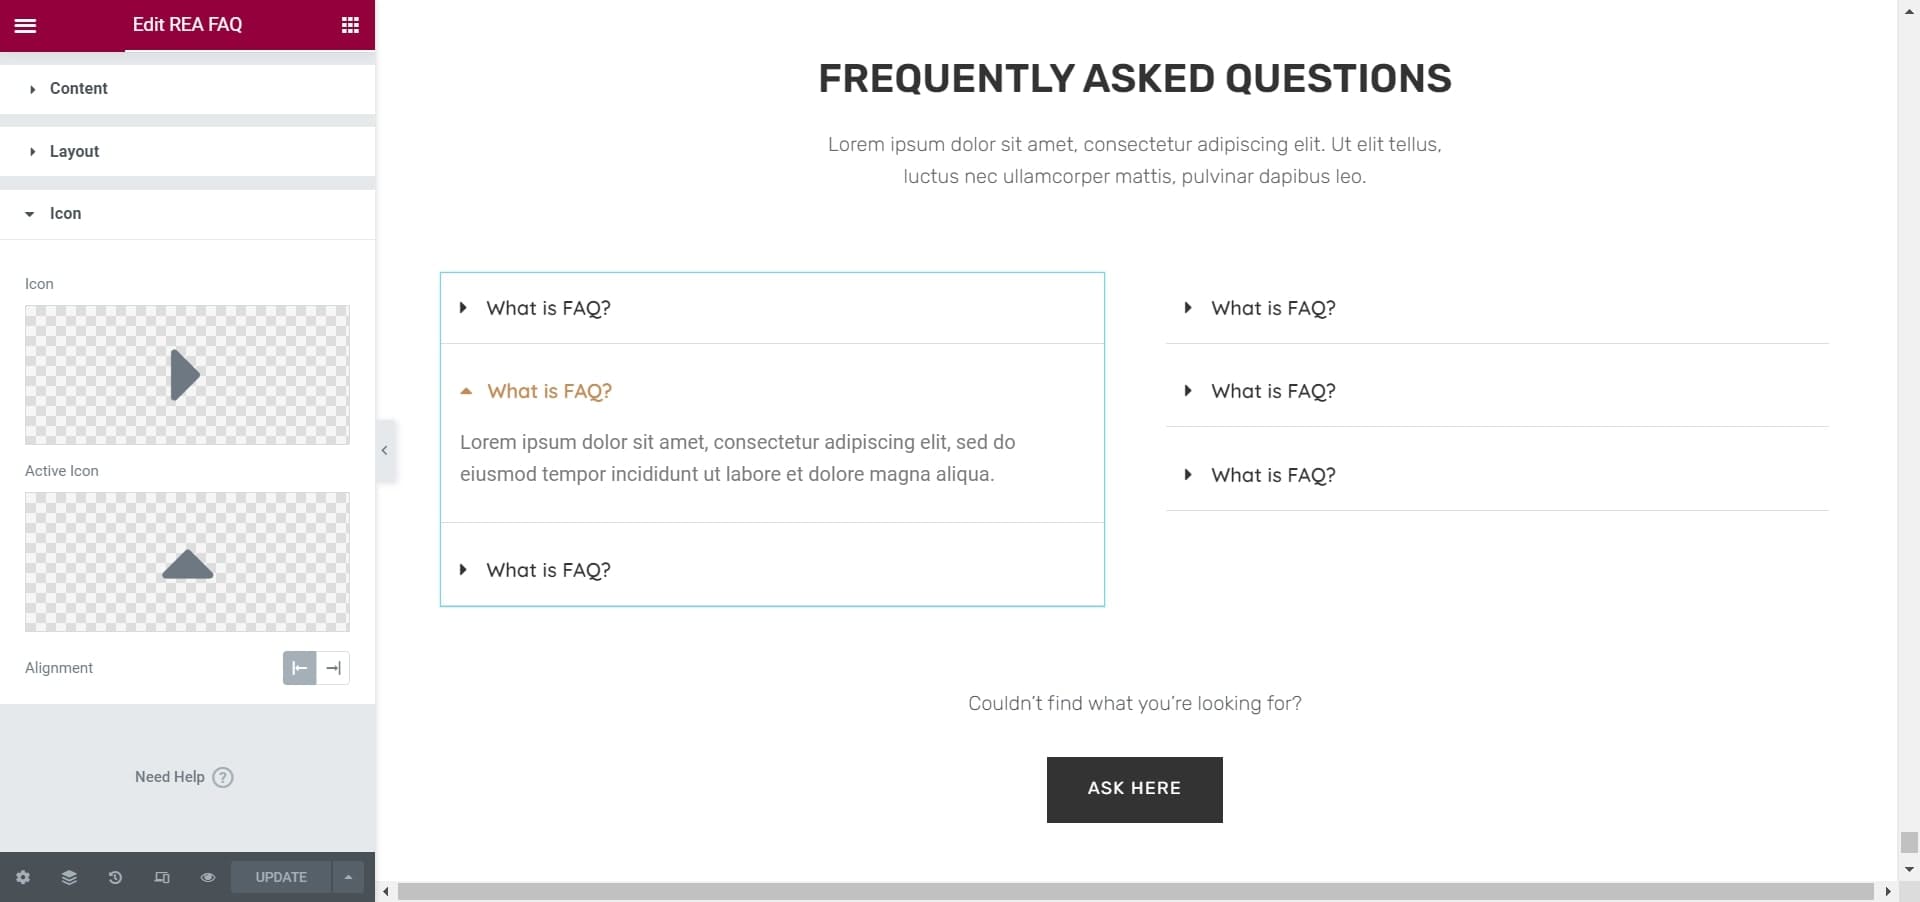 REA FAQ Widget Demo Screenshot 2